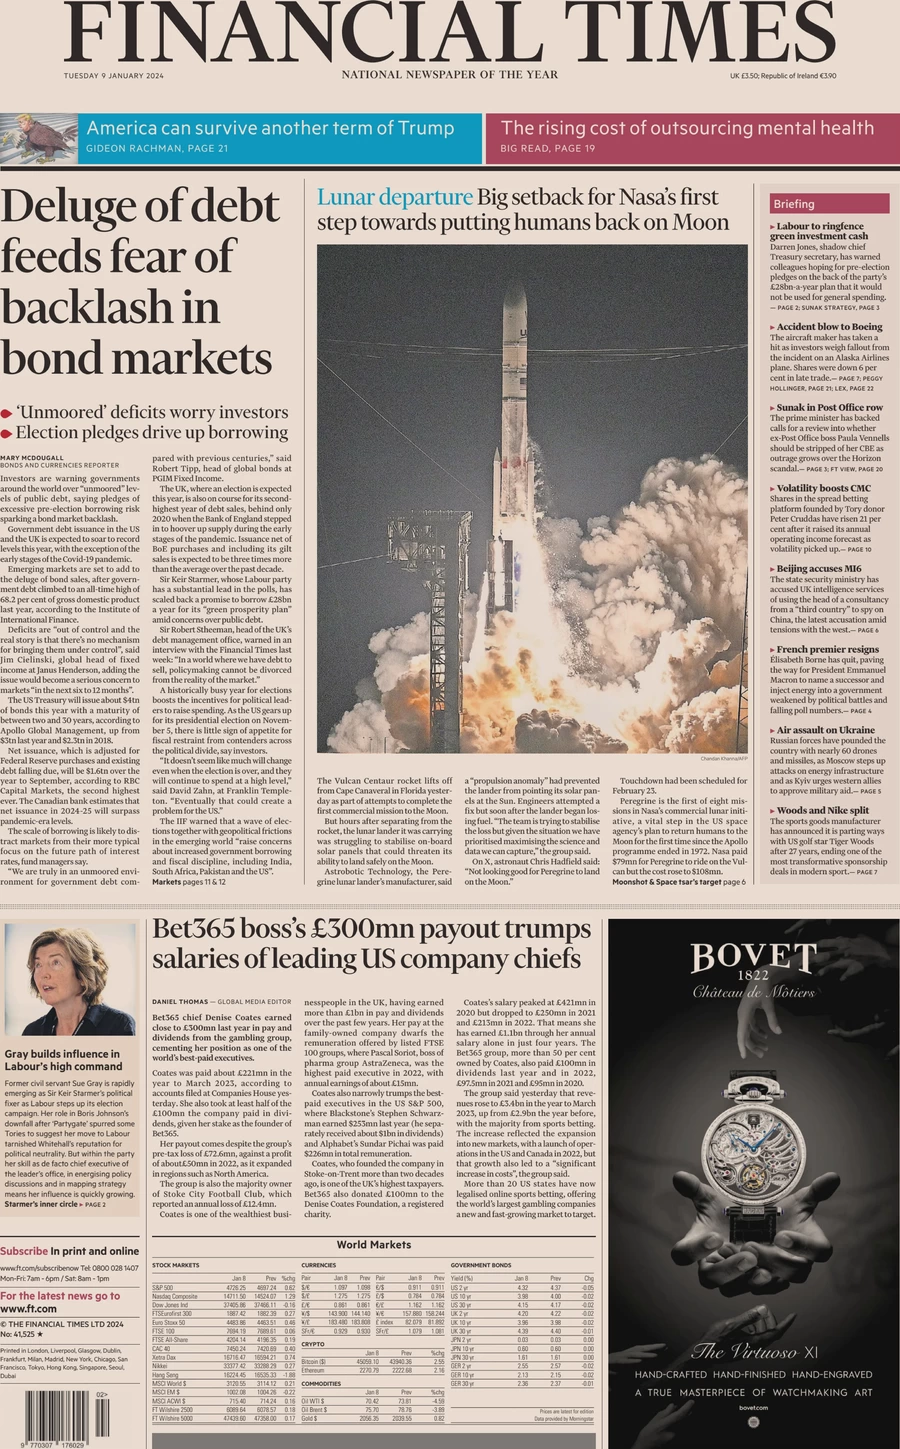 Financial Times - Deluge of debt feeds fear of backlash in bond markets